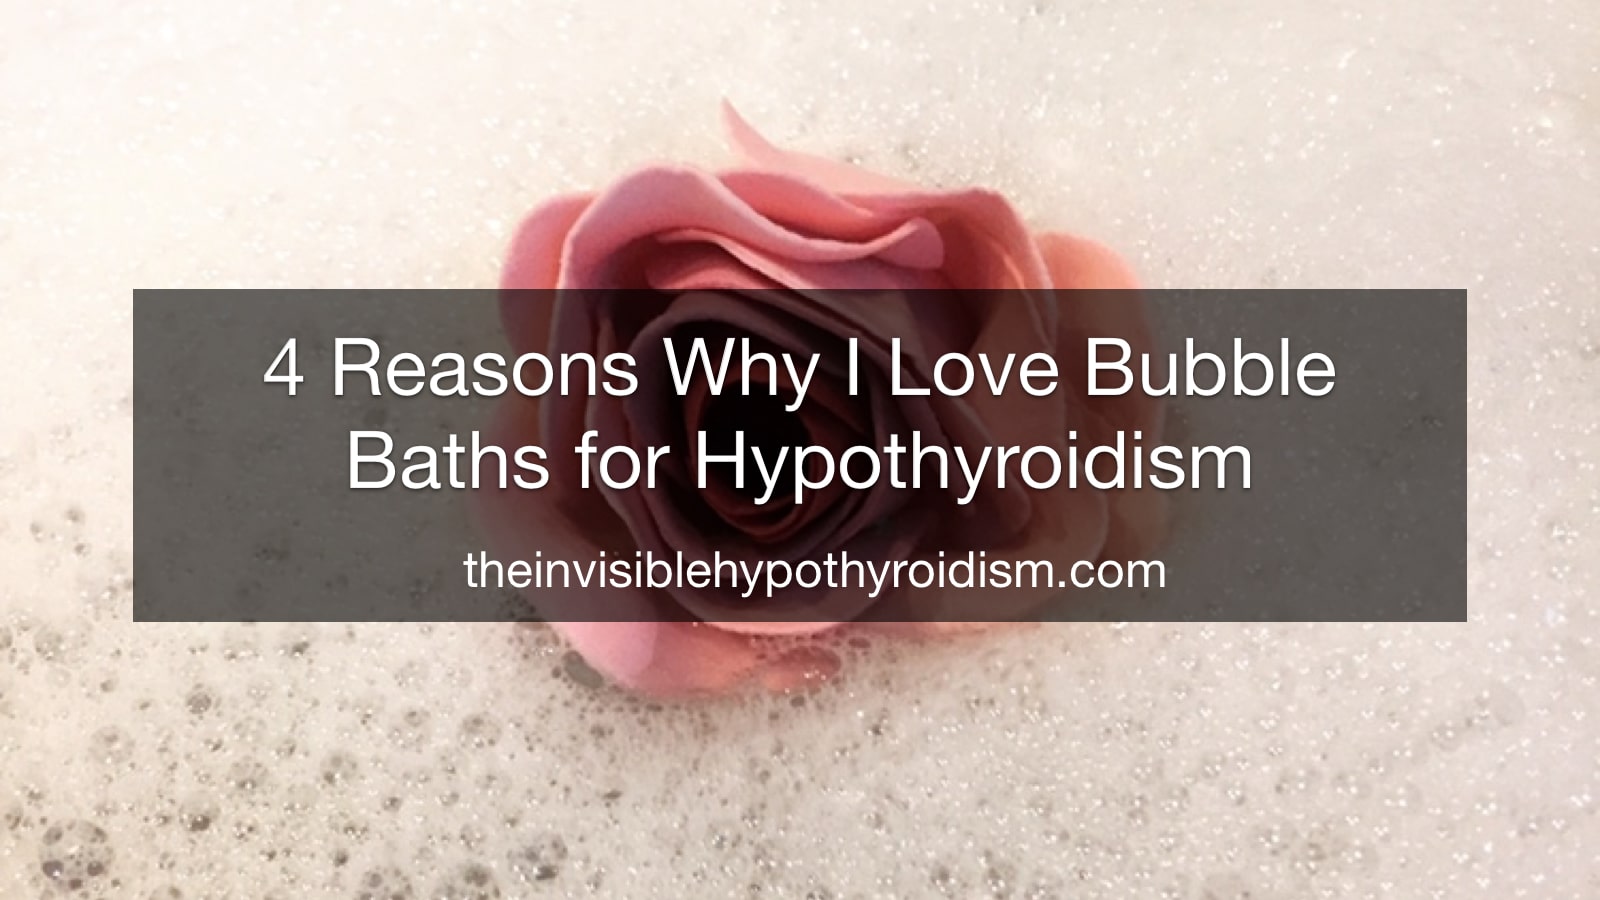 4 Reasons Why I Love Bubble Baths for Hypothyroidism